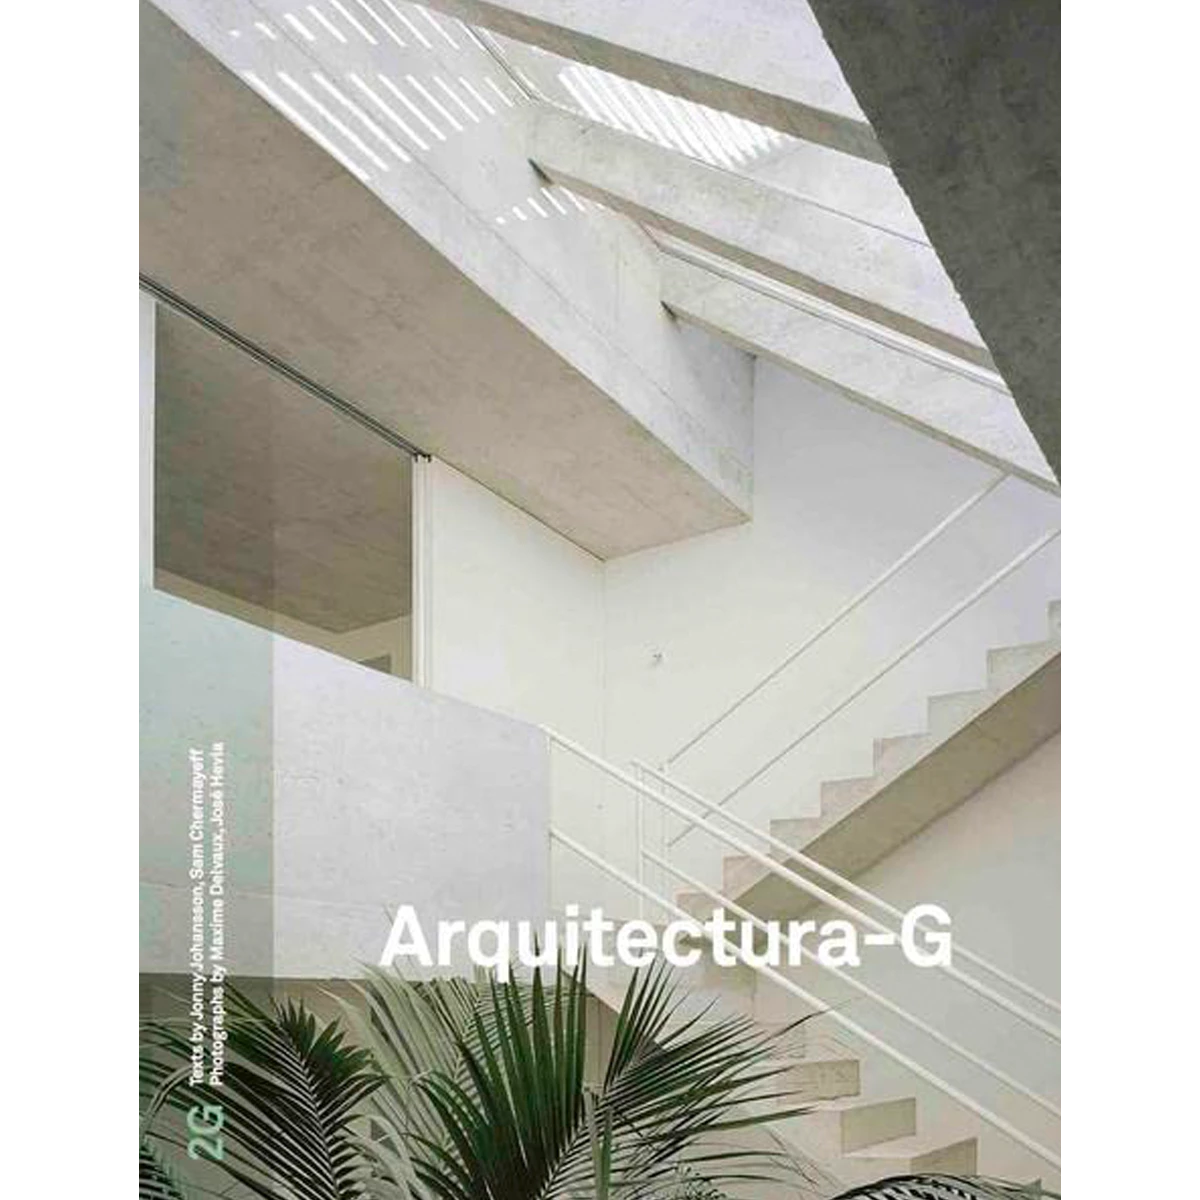 2G 86: Arquitectura-G